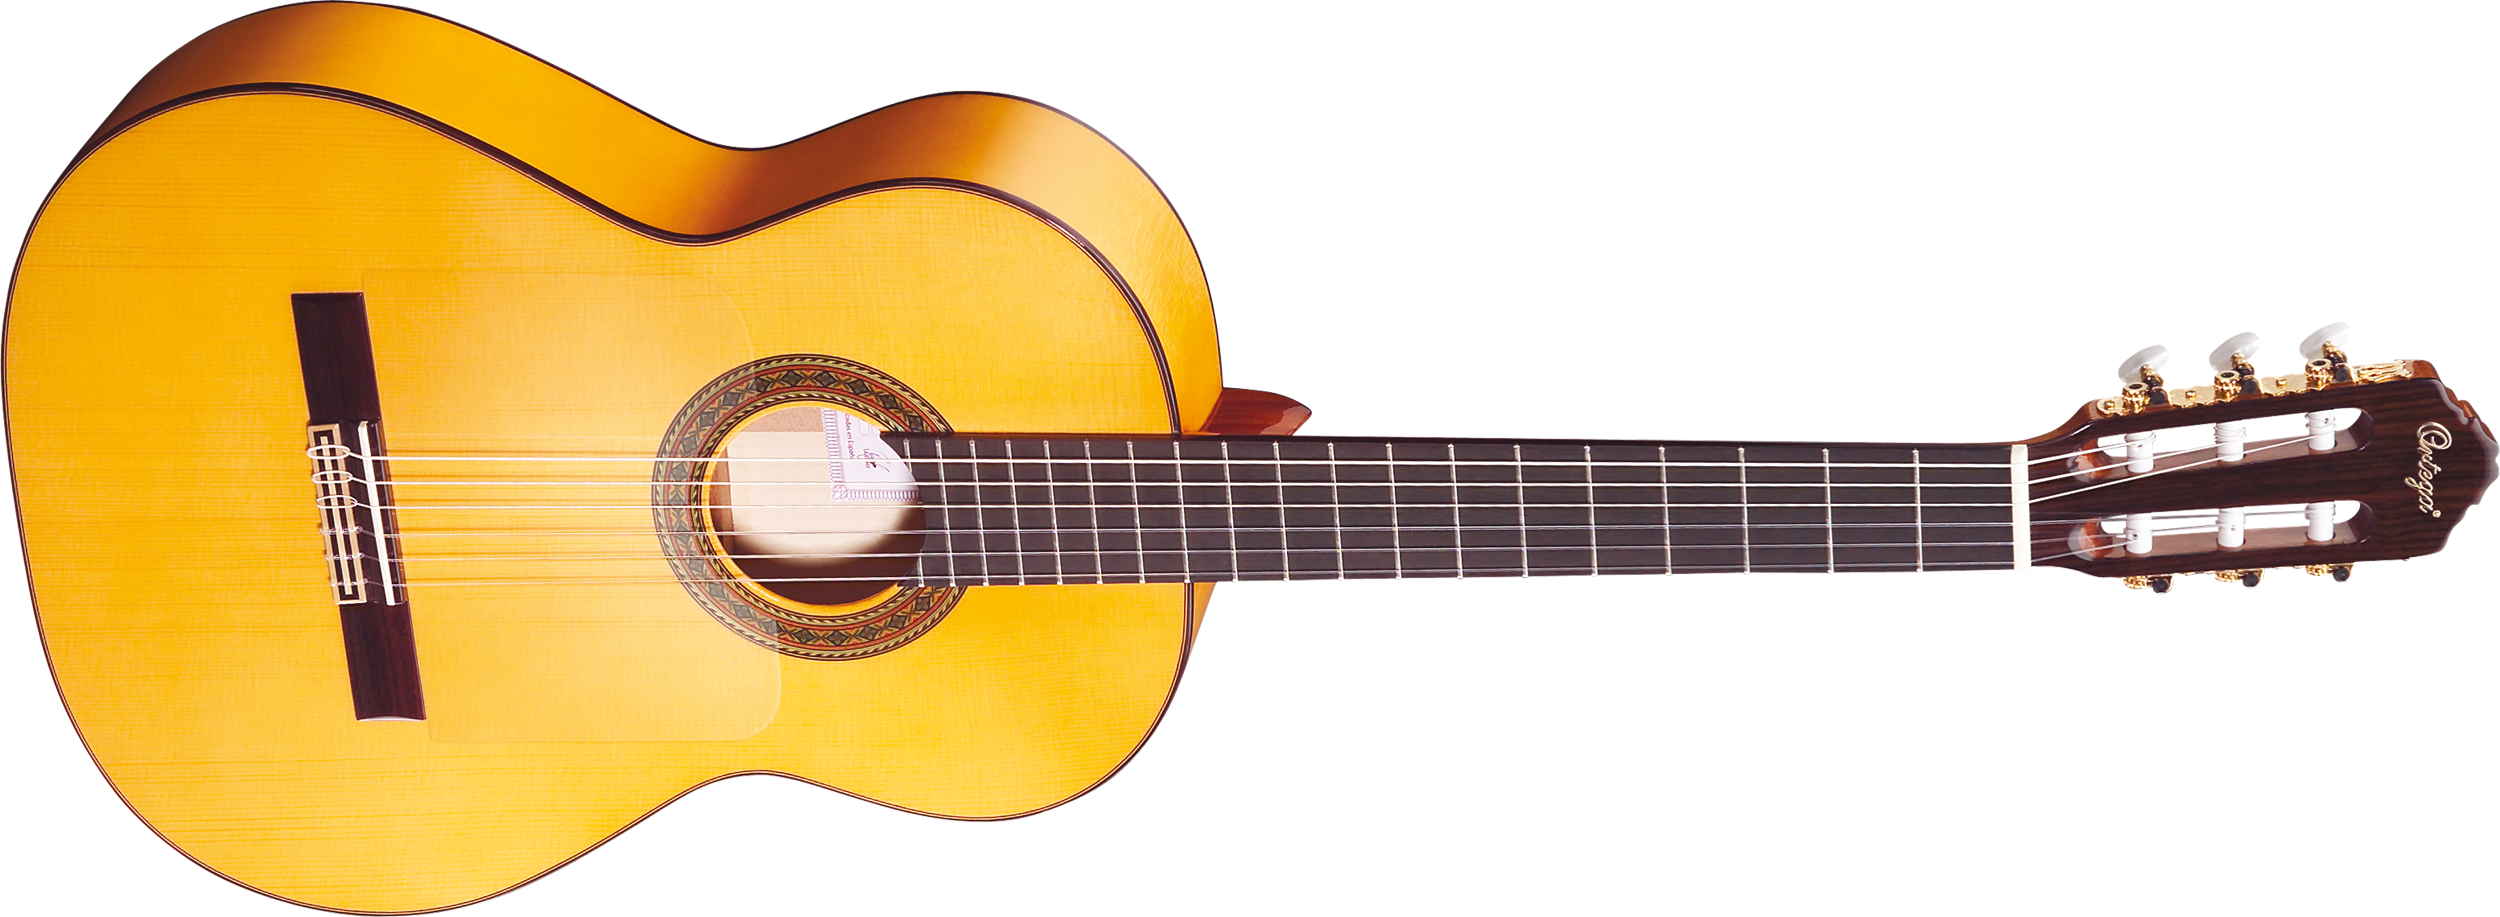 Wooden Guitar PNG Transparent Image